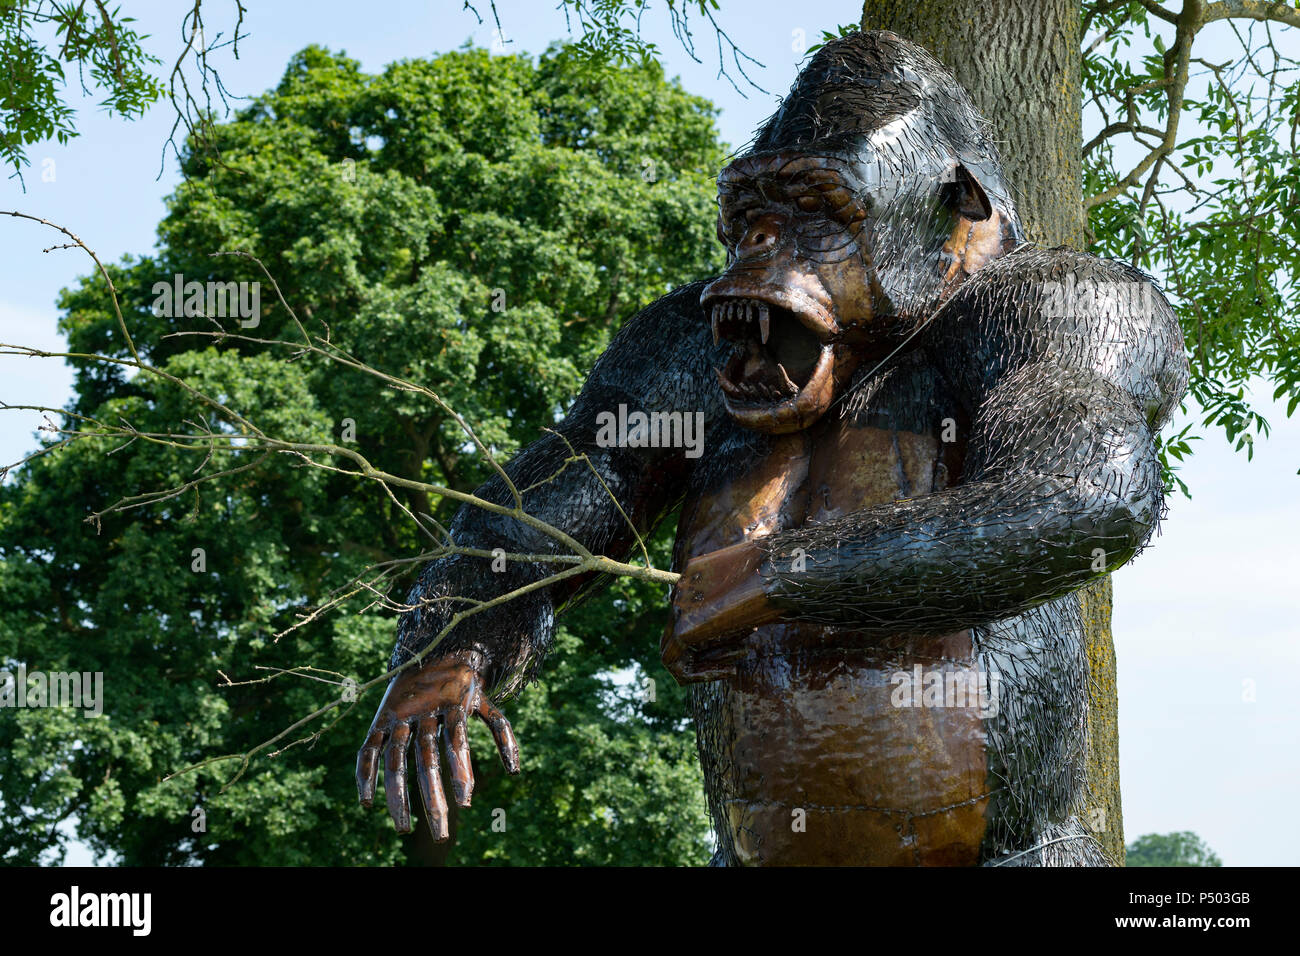 Gorilla sculpture on display at the British Iron Work Centre tourist ...